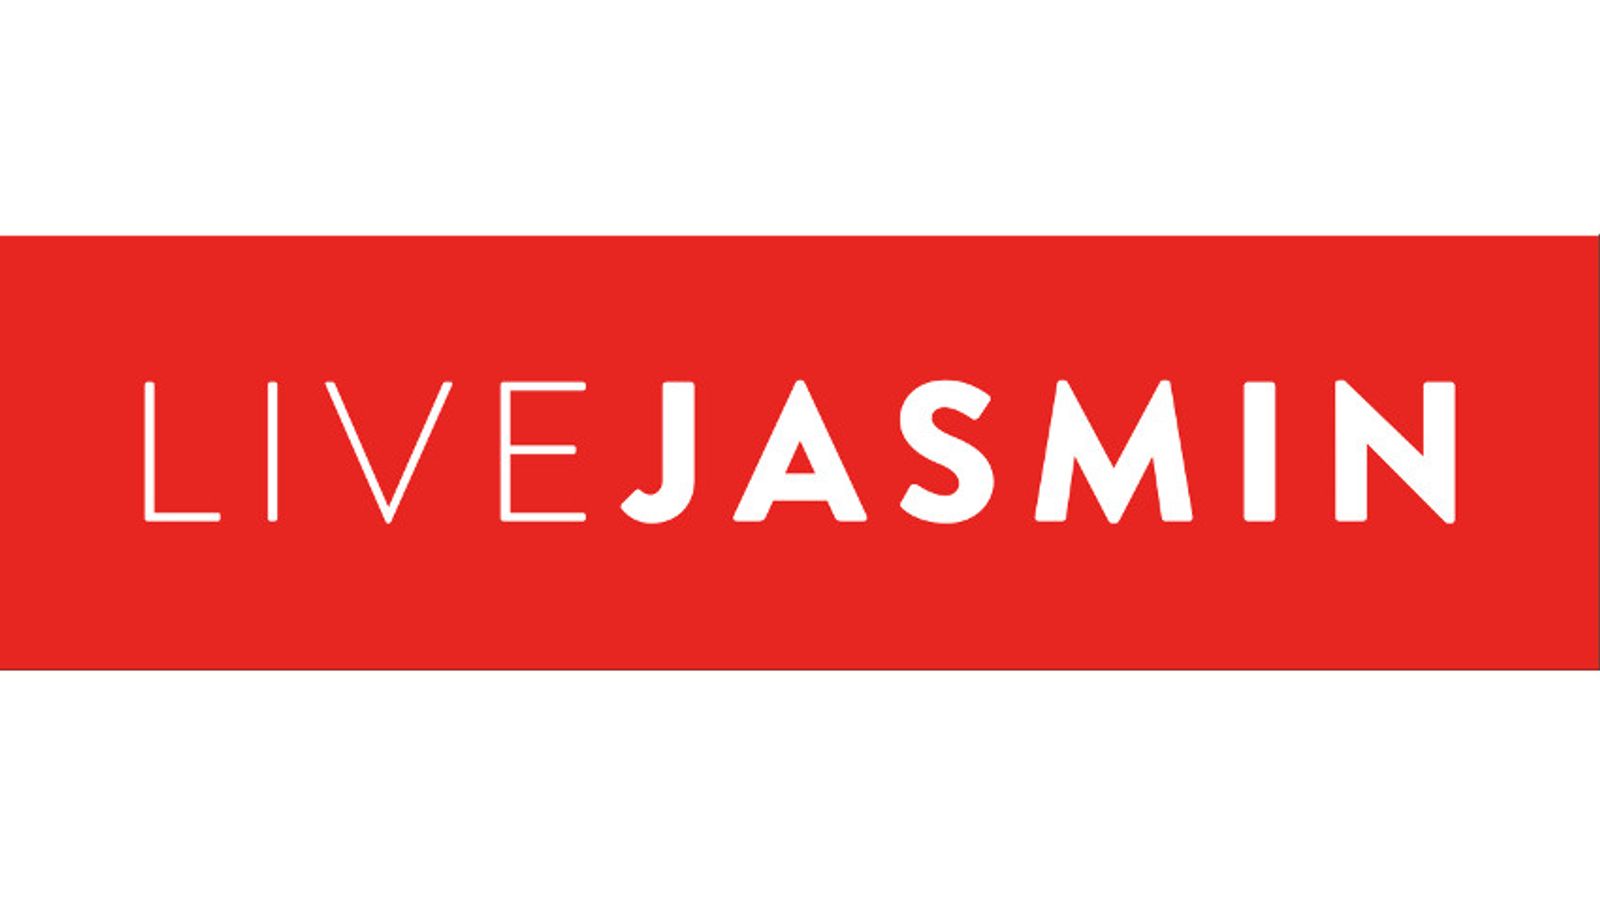 LiveJasmin Starts 2018 With Multiple Awards